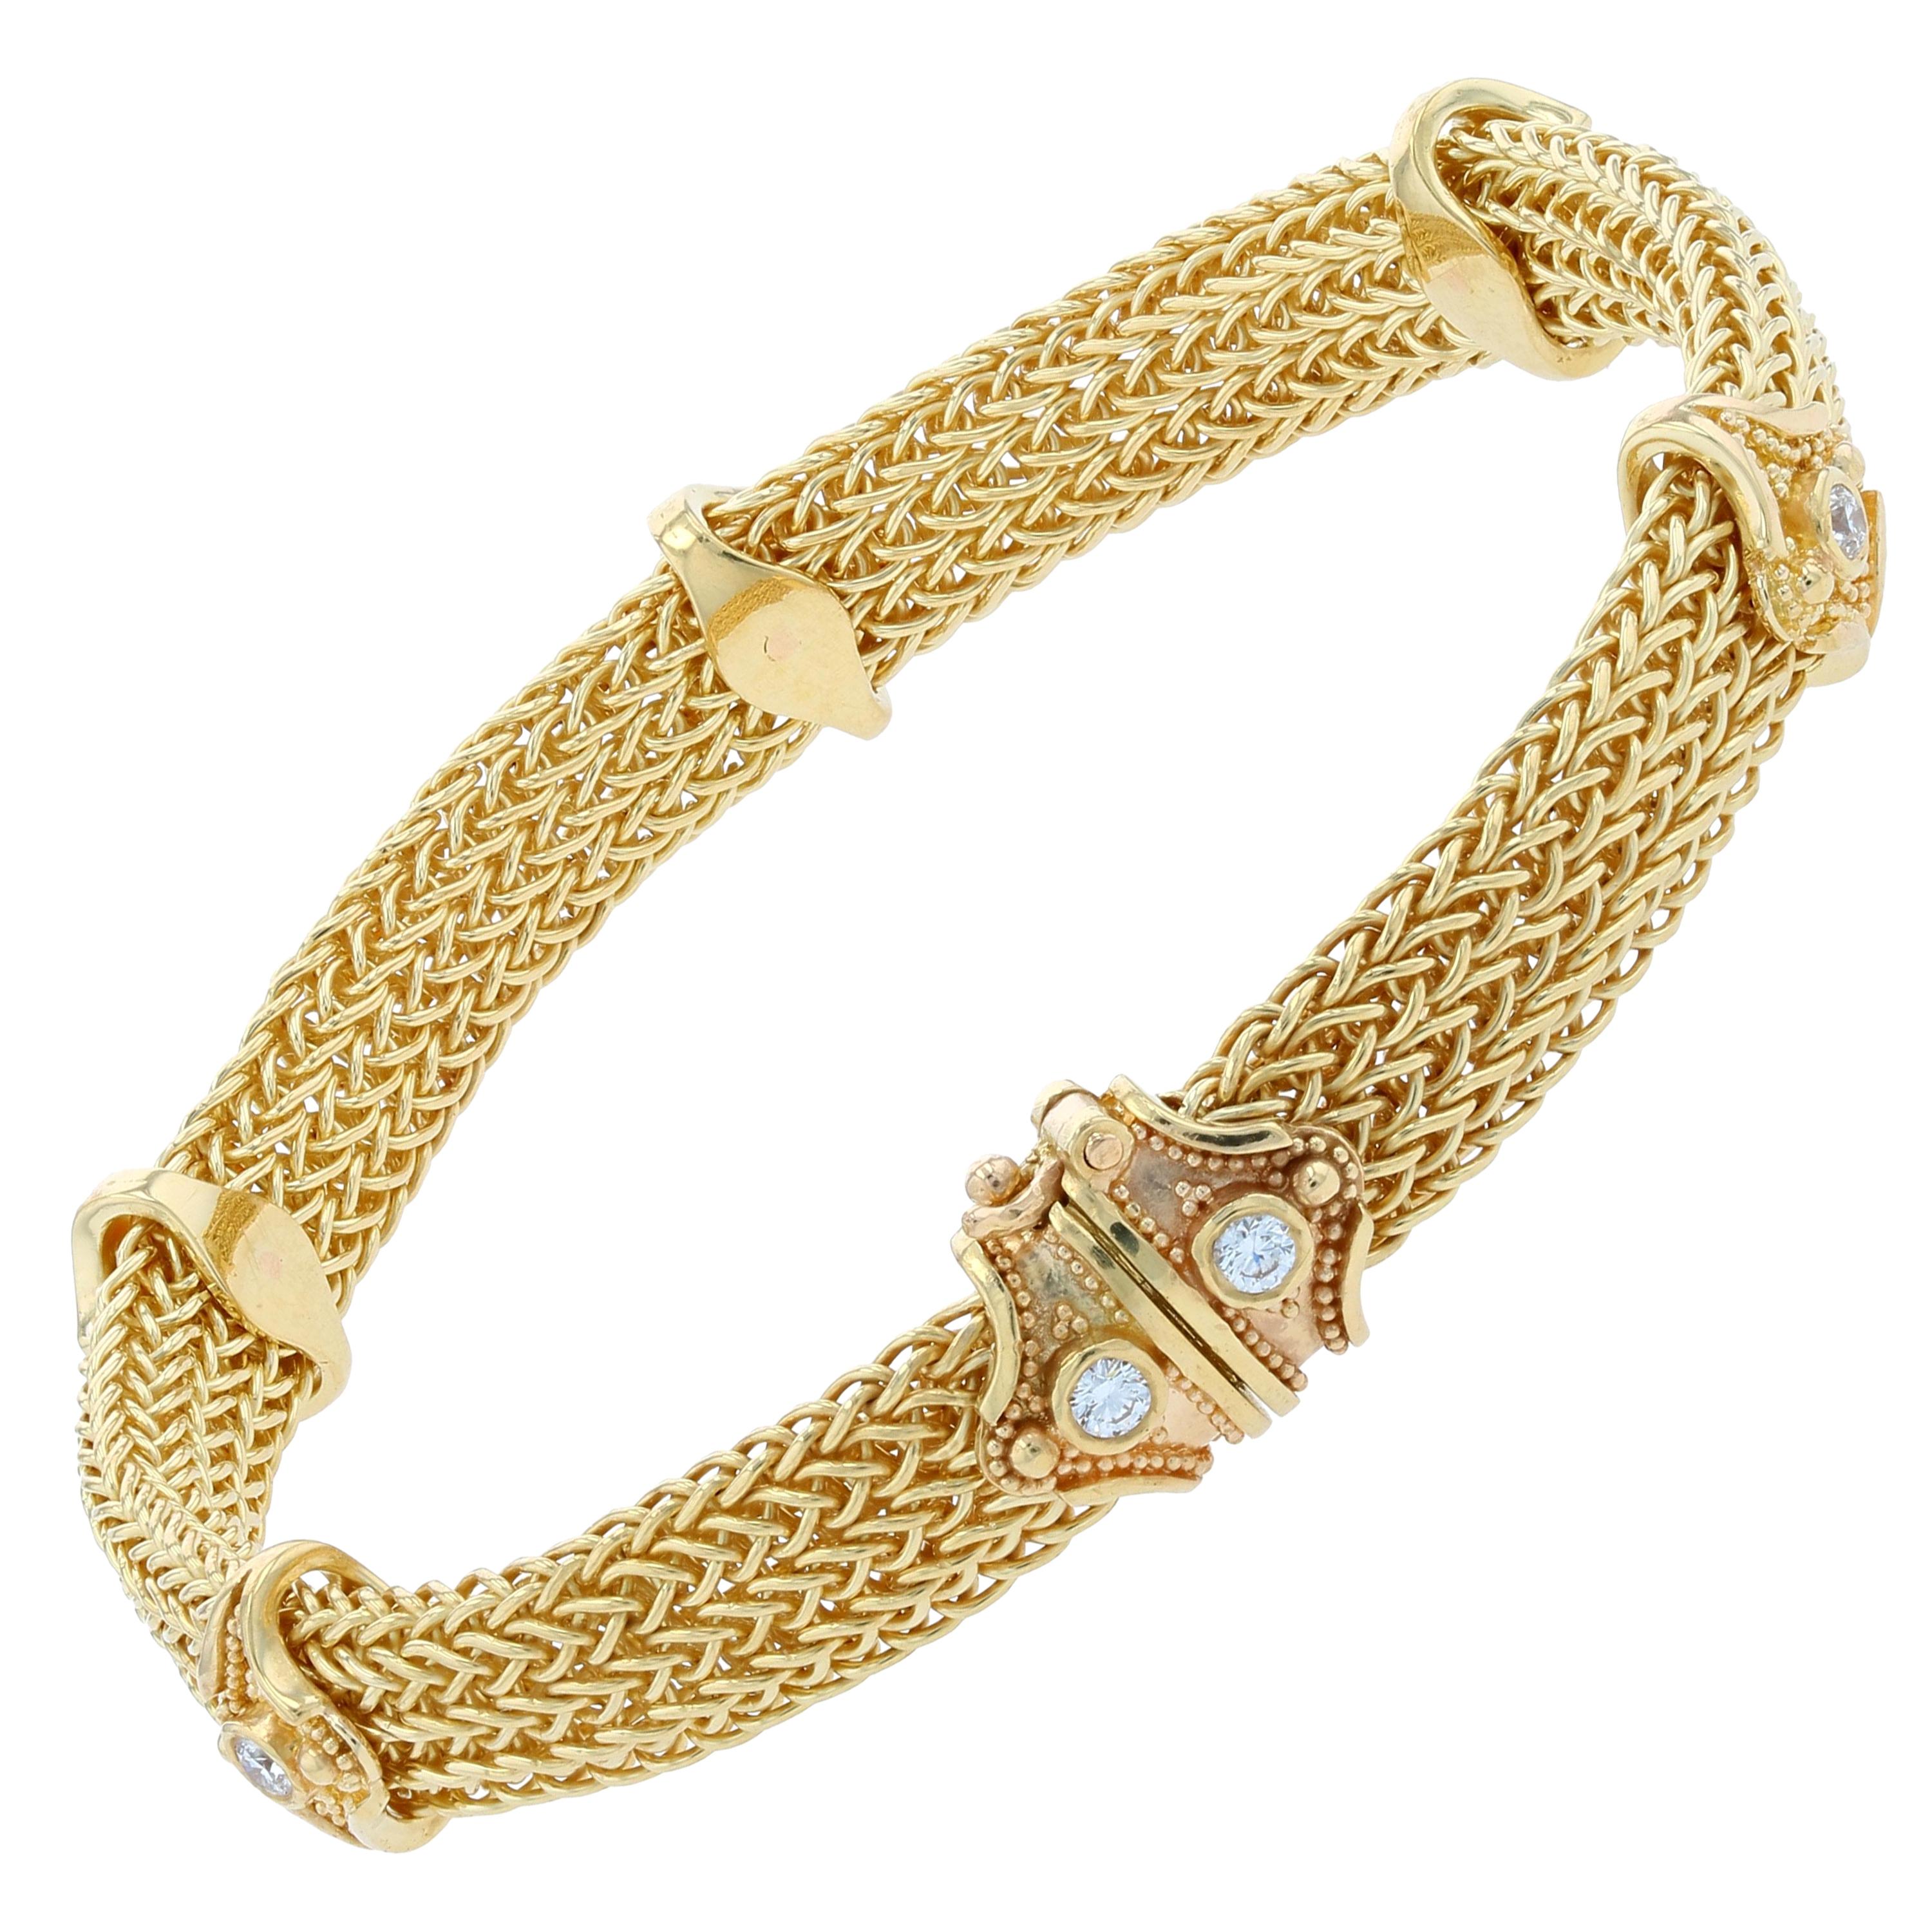 Kent Raible 18 Karat Gold Woven Chain Bracelet with Diamonds and Granulation